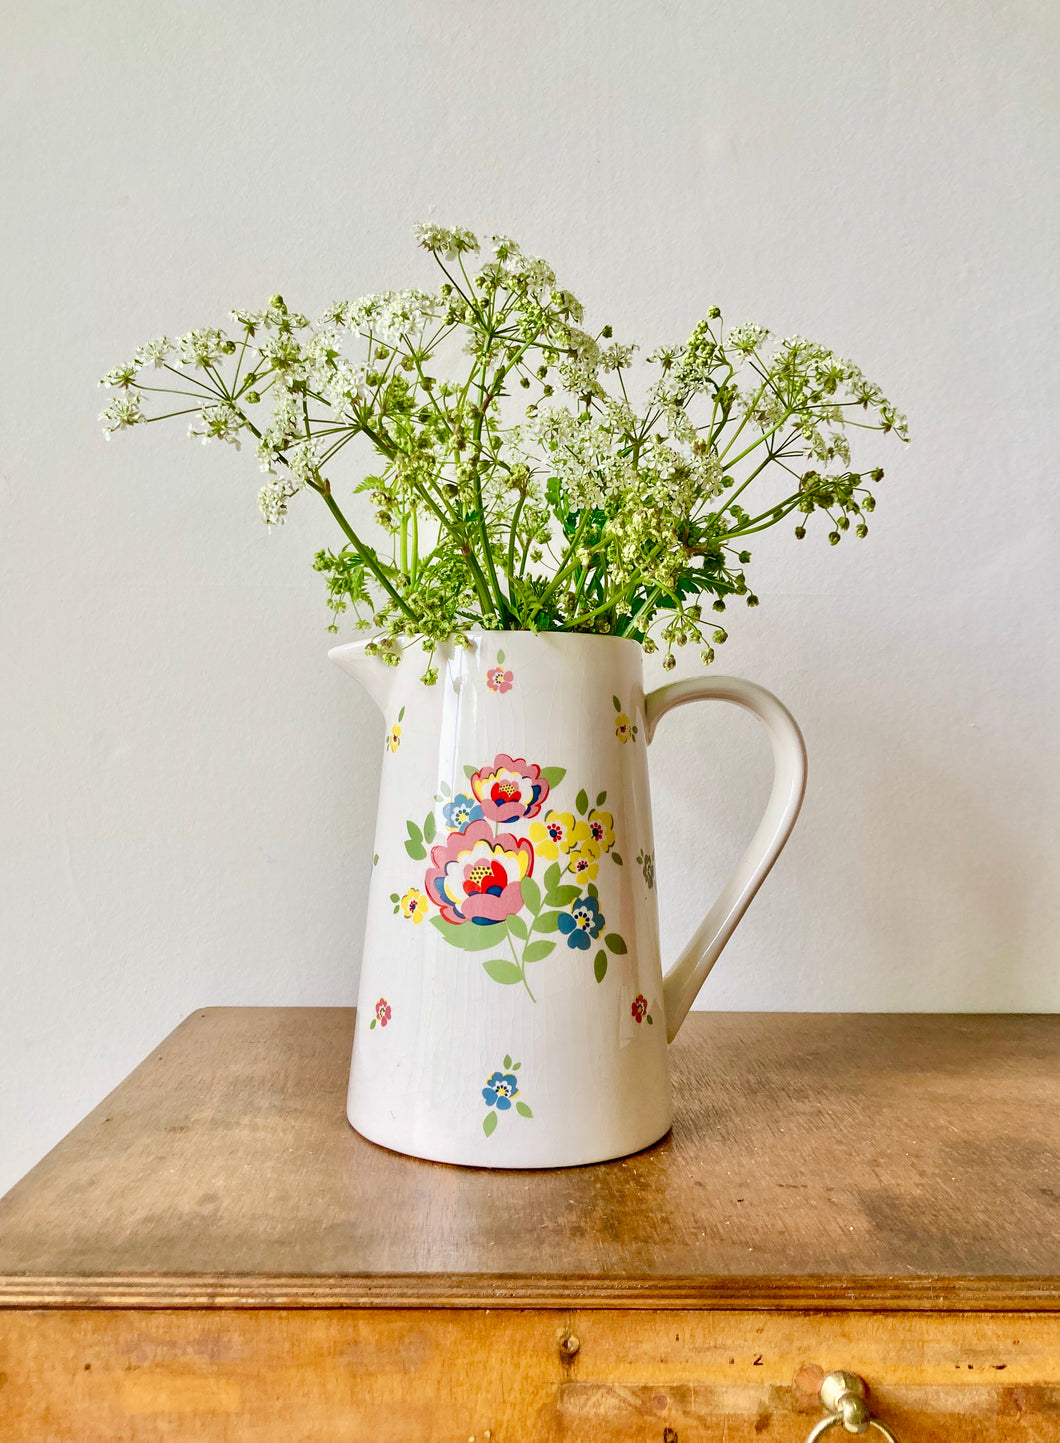 Floral jug by Gisela Graham, London